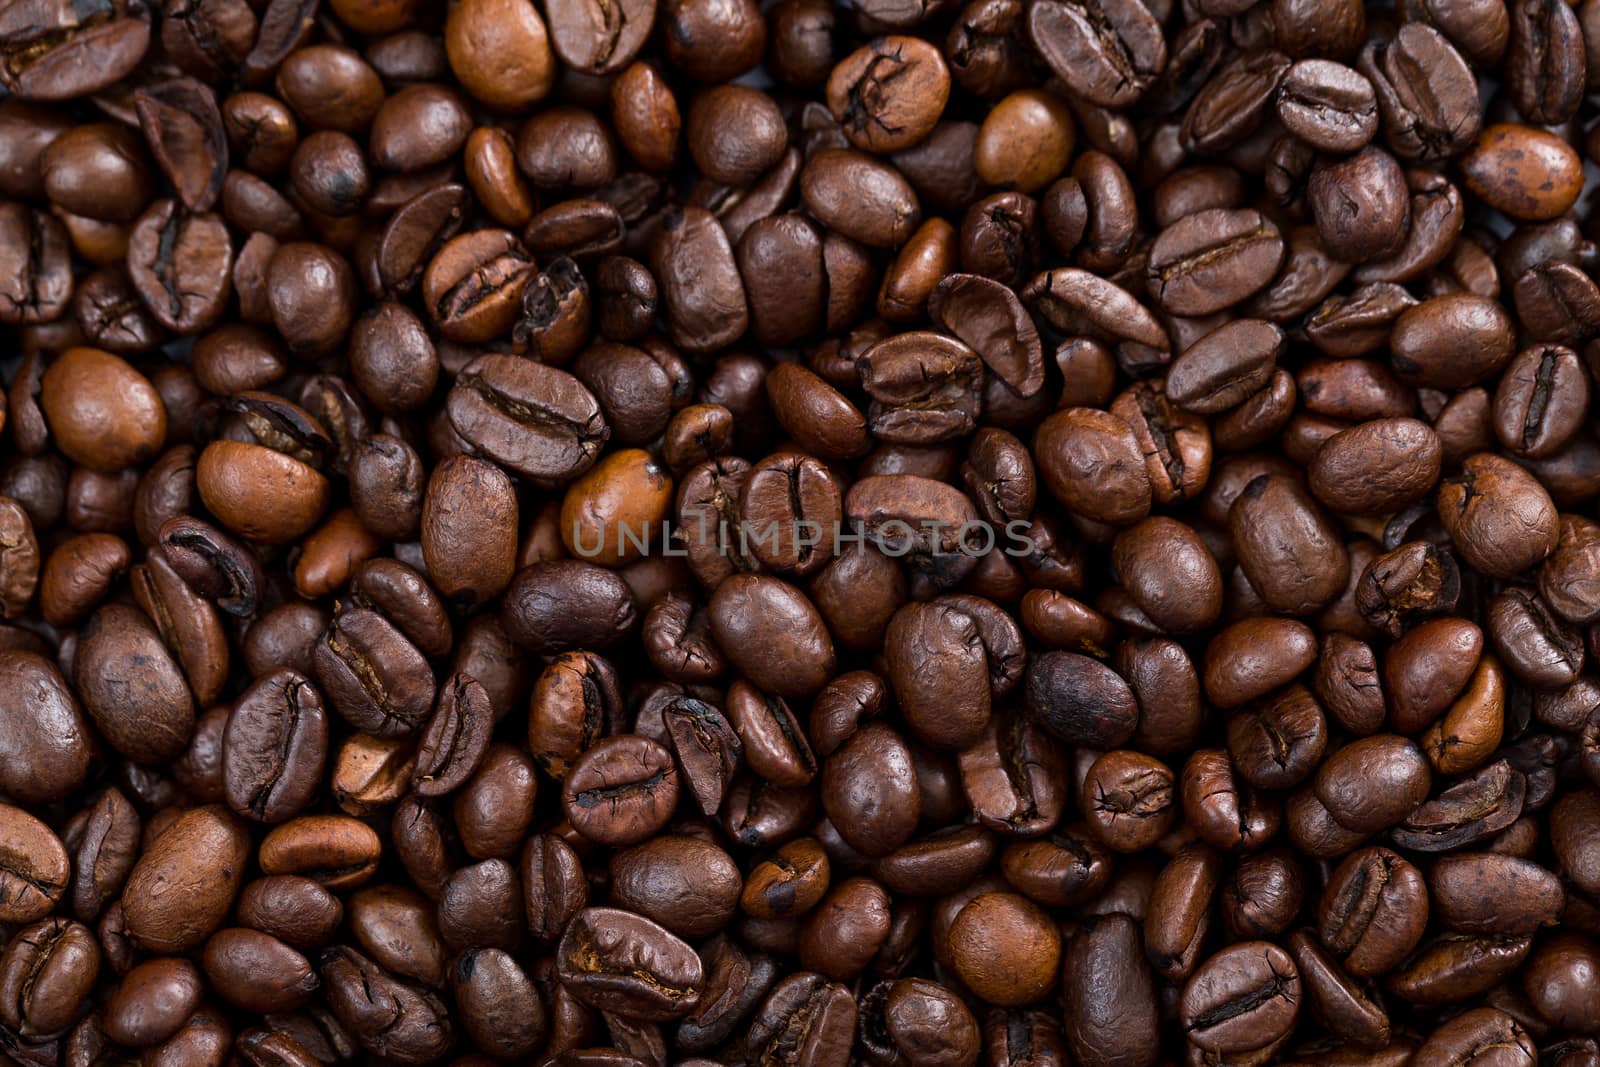 Roasted Coffee bean texture by leungchopan